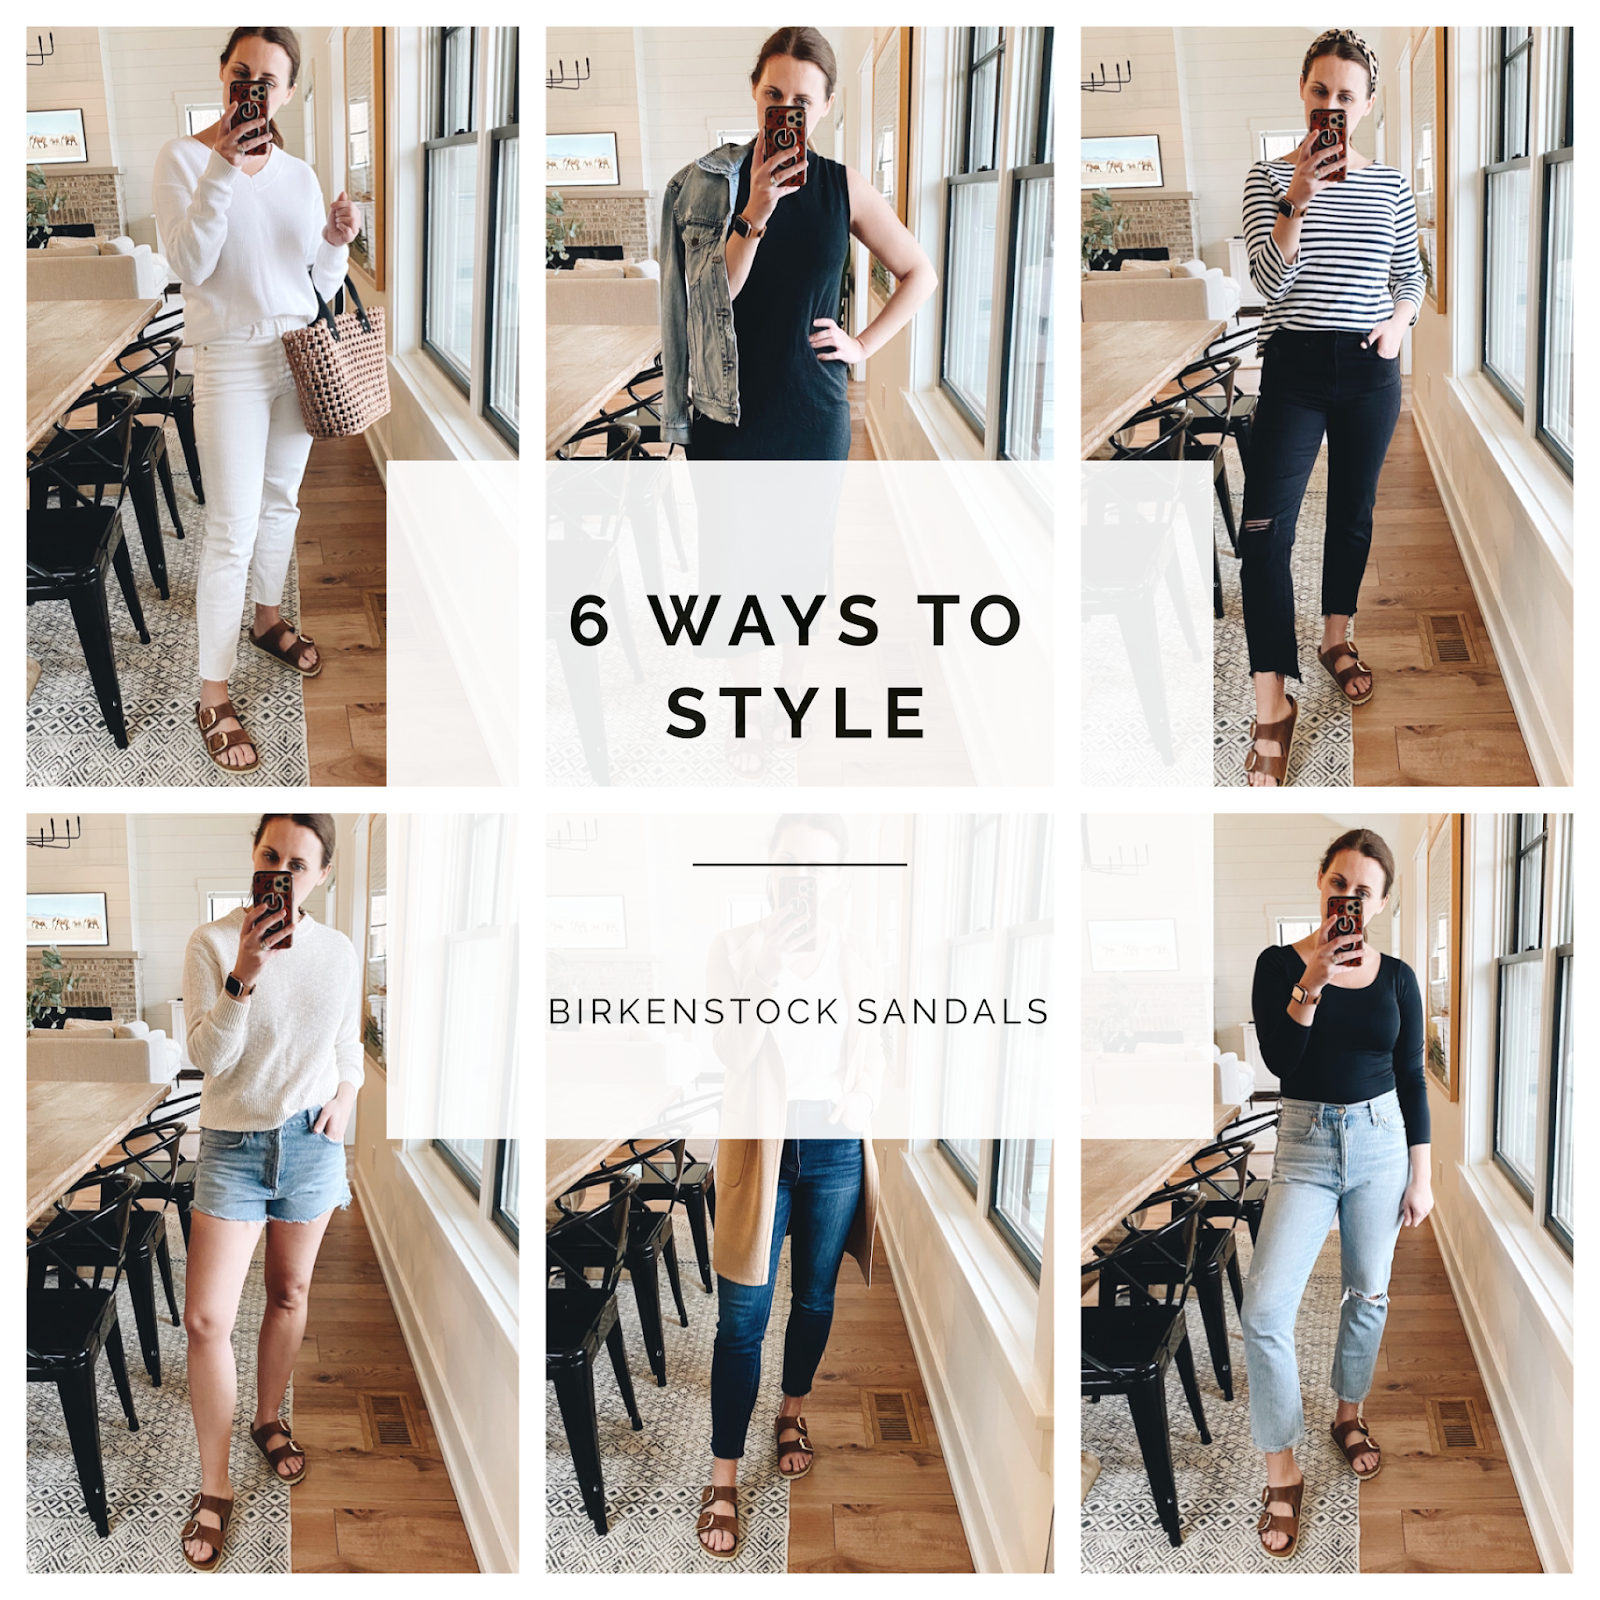 How to Wear Birkenstocks For Fall